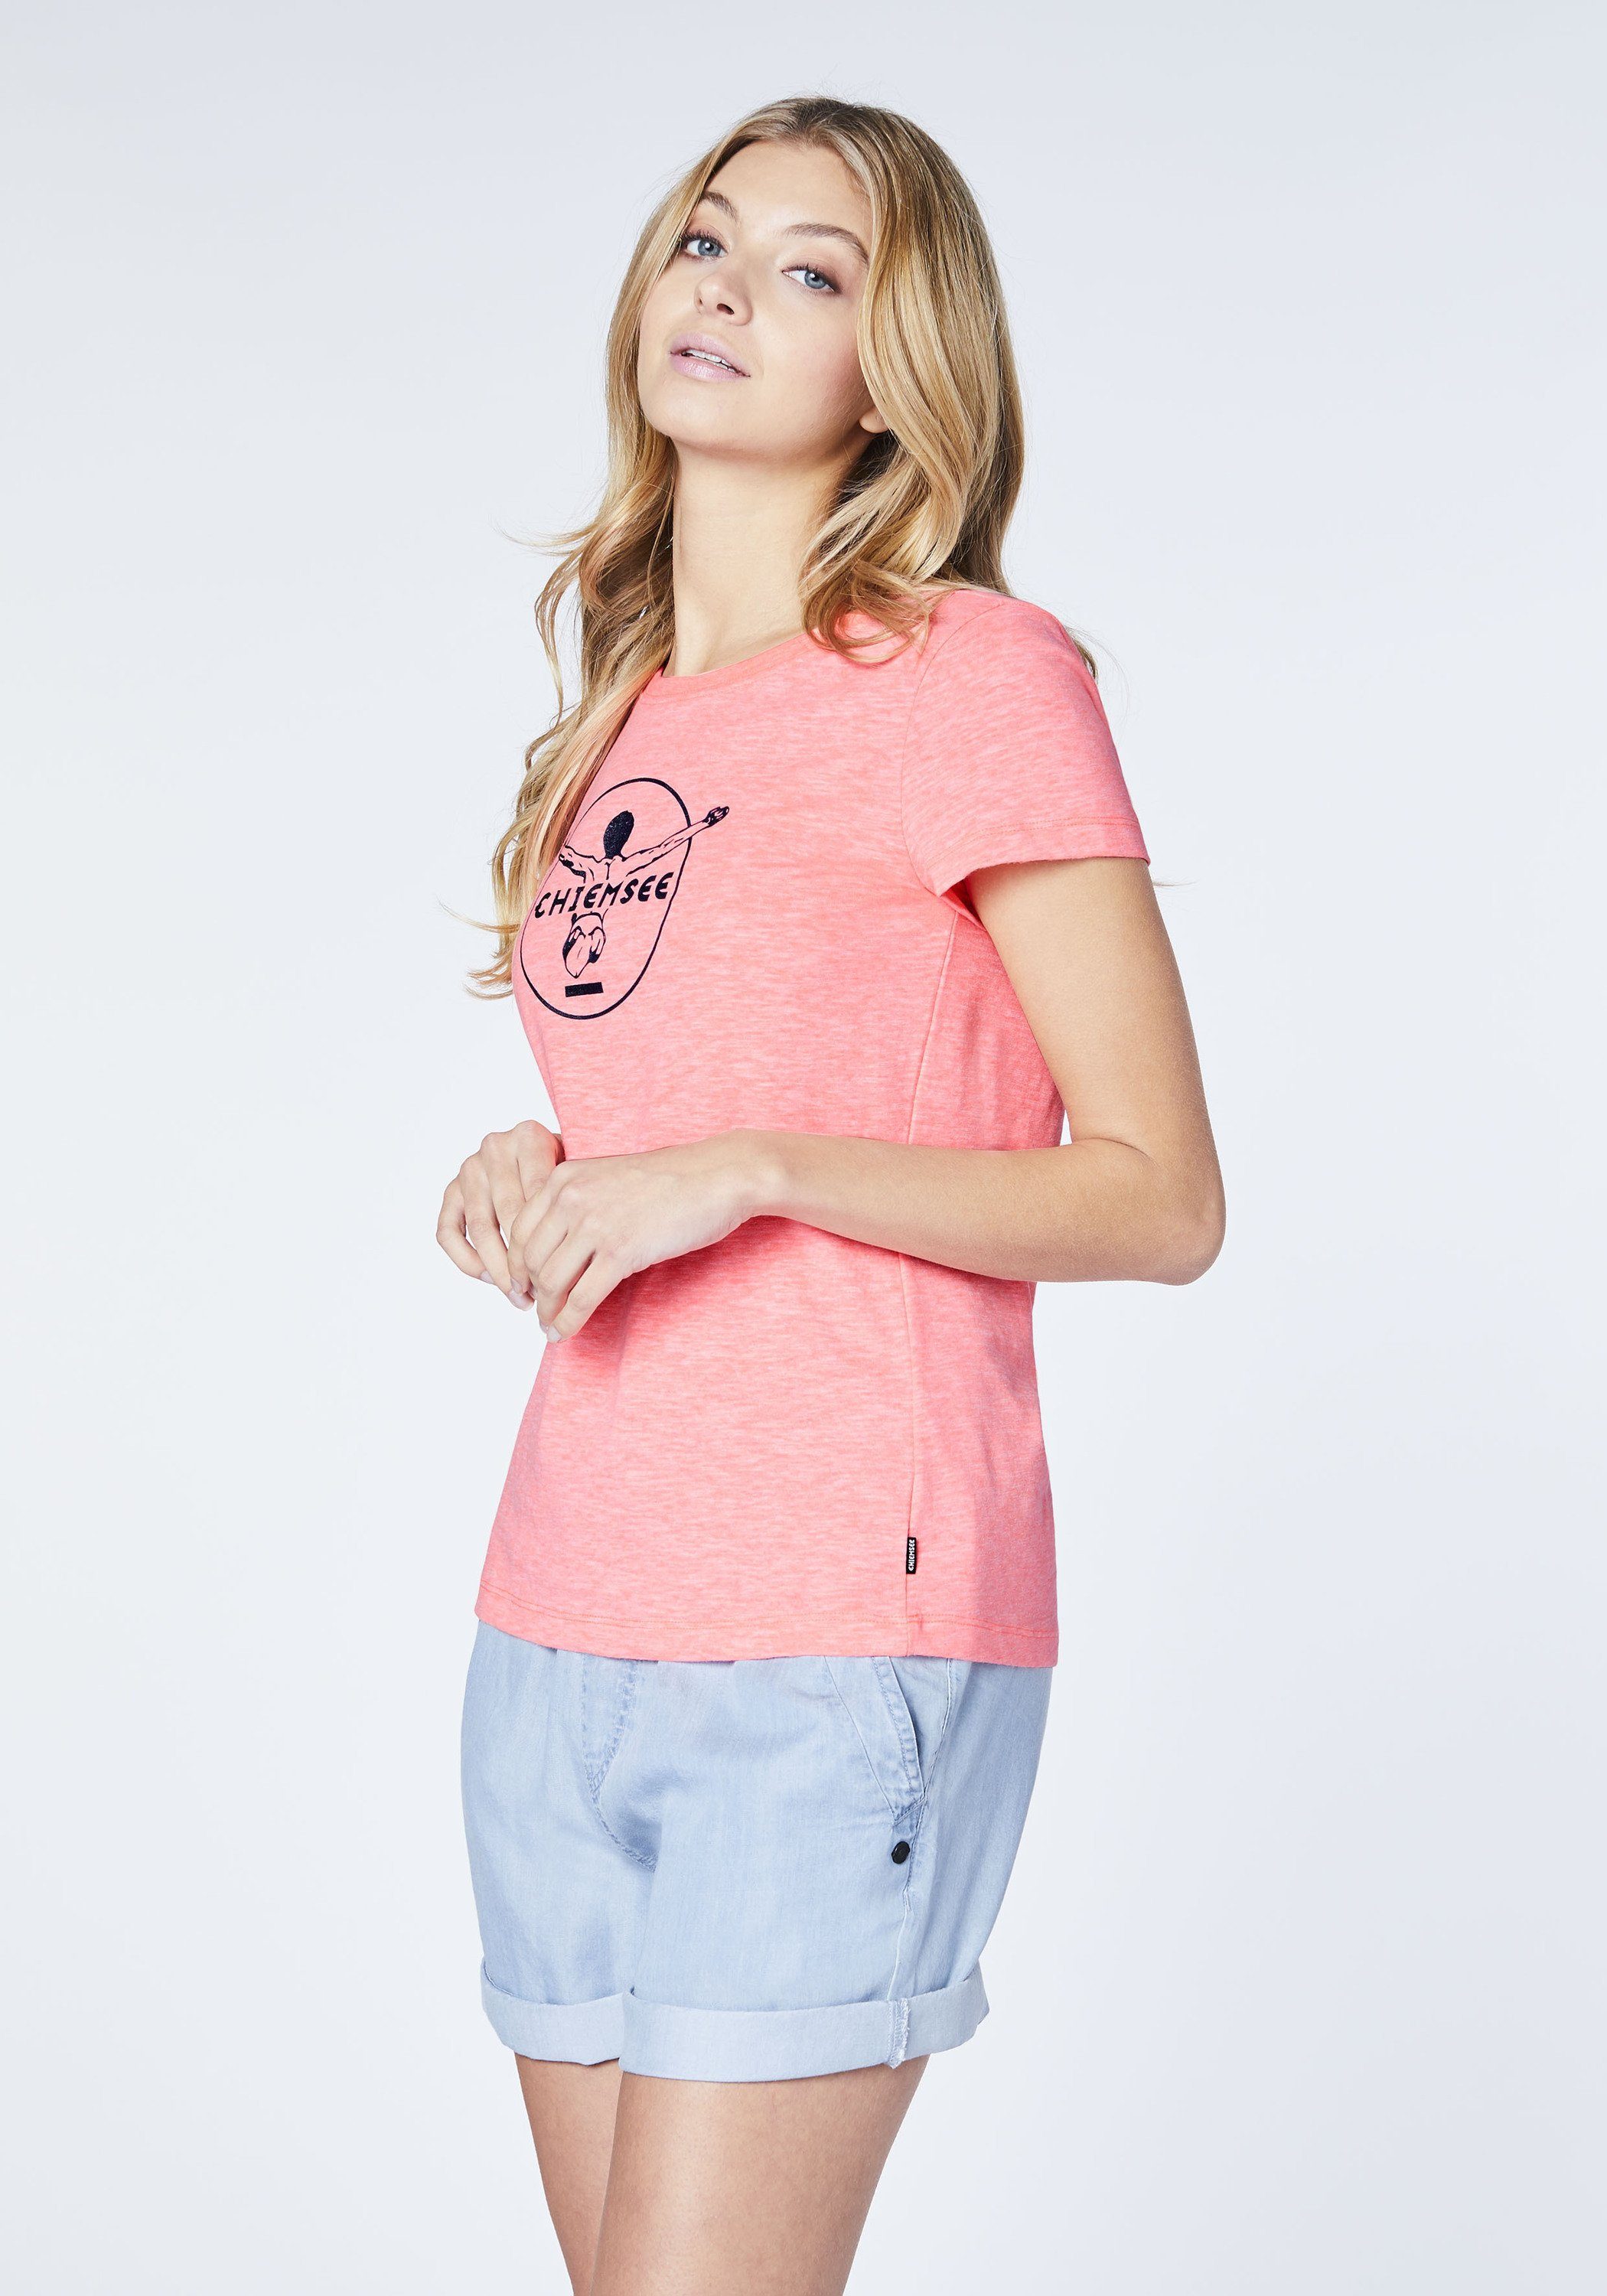 Chiemsee mit 1 Jumper-Frontprint Pink Neon T-Shirt Print-Shirt